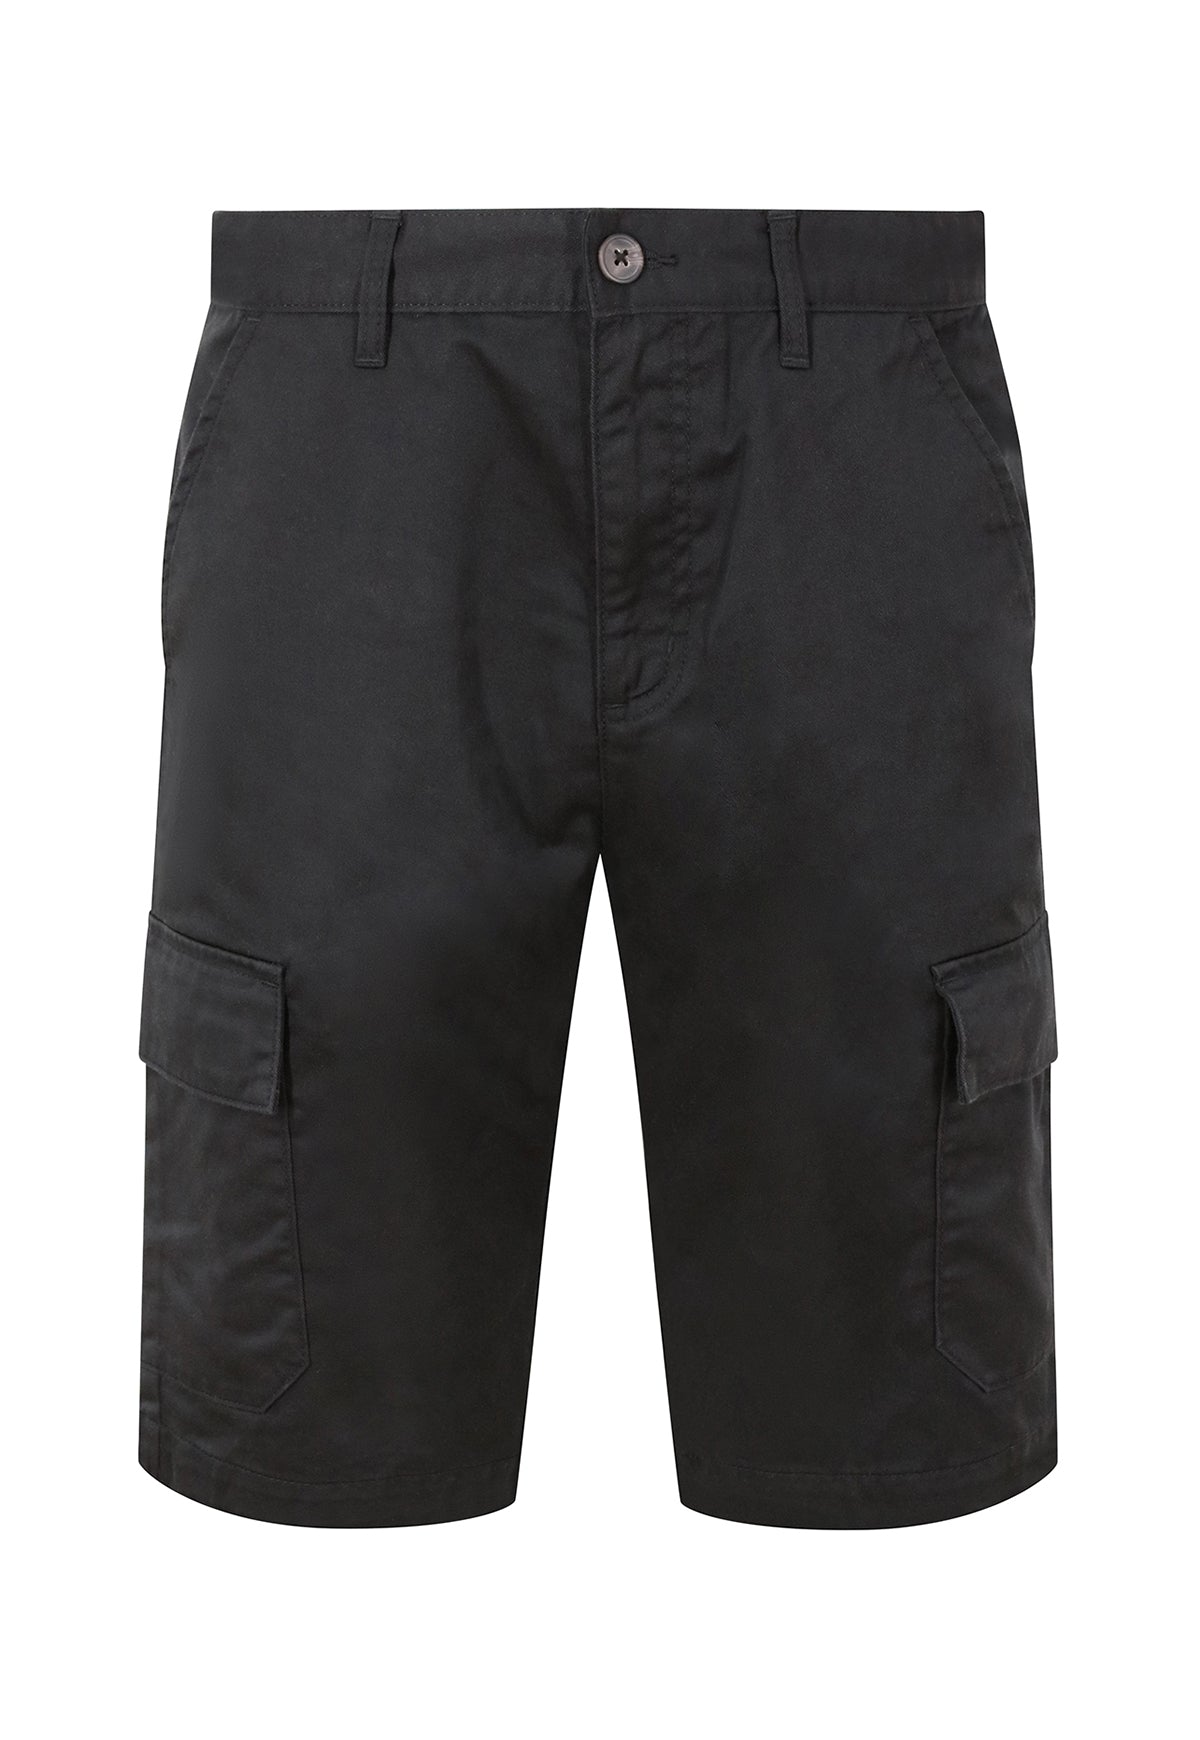 Pro Cargo Shorts RX605 - The Work Uniform Company